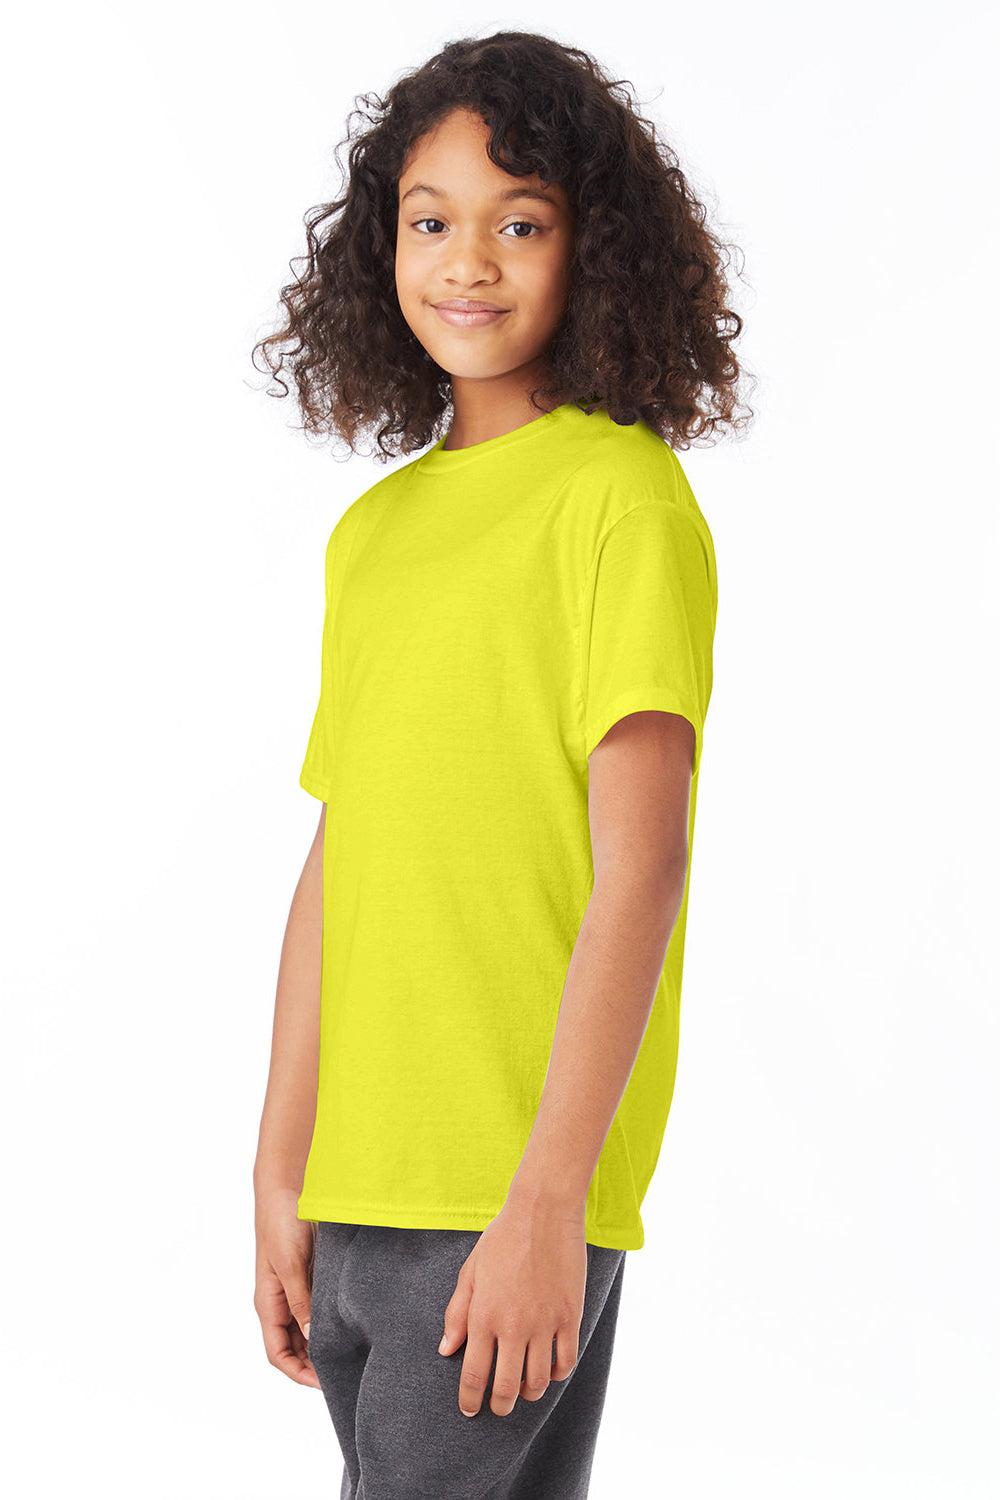 Hanes 5370 Youth EcoSmart Short Sleeve Crewneck T-Shirt Safety Green 3Q